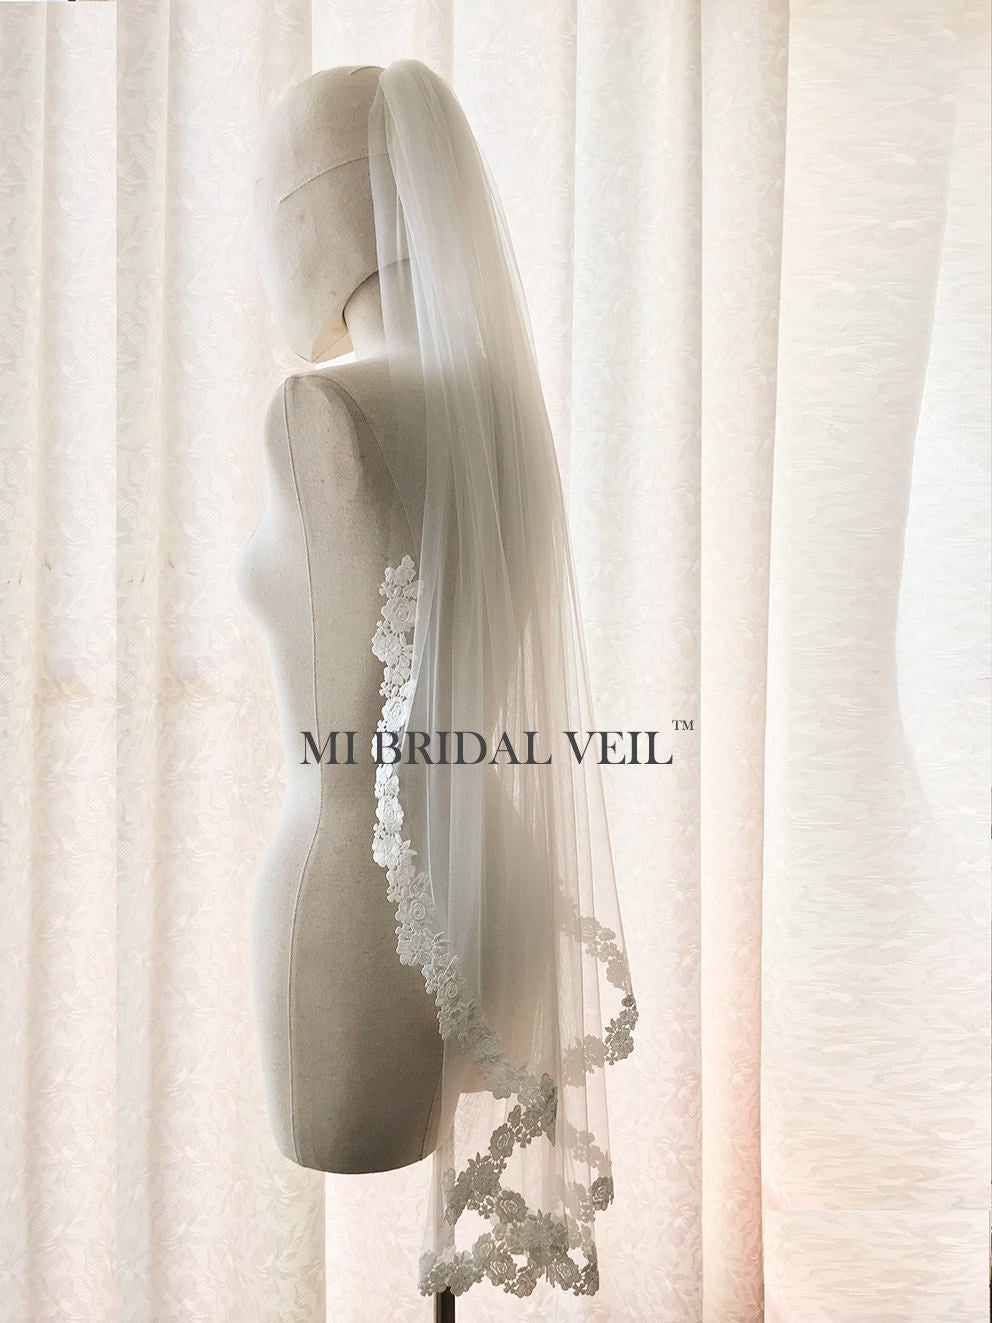 Lace Wedding Veil, Venice Rose Bridal Veil Lace at Chest Fingertip Mi Bridal